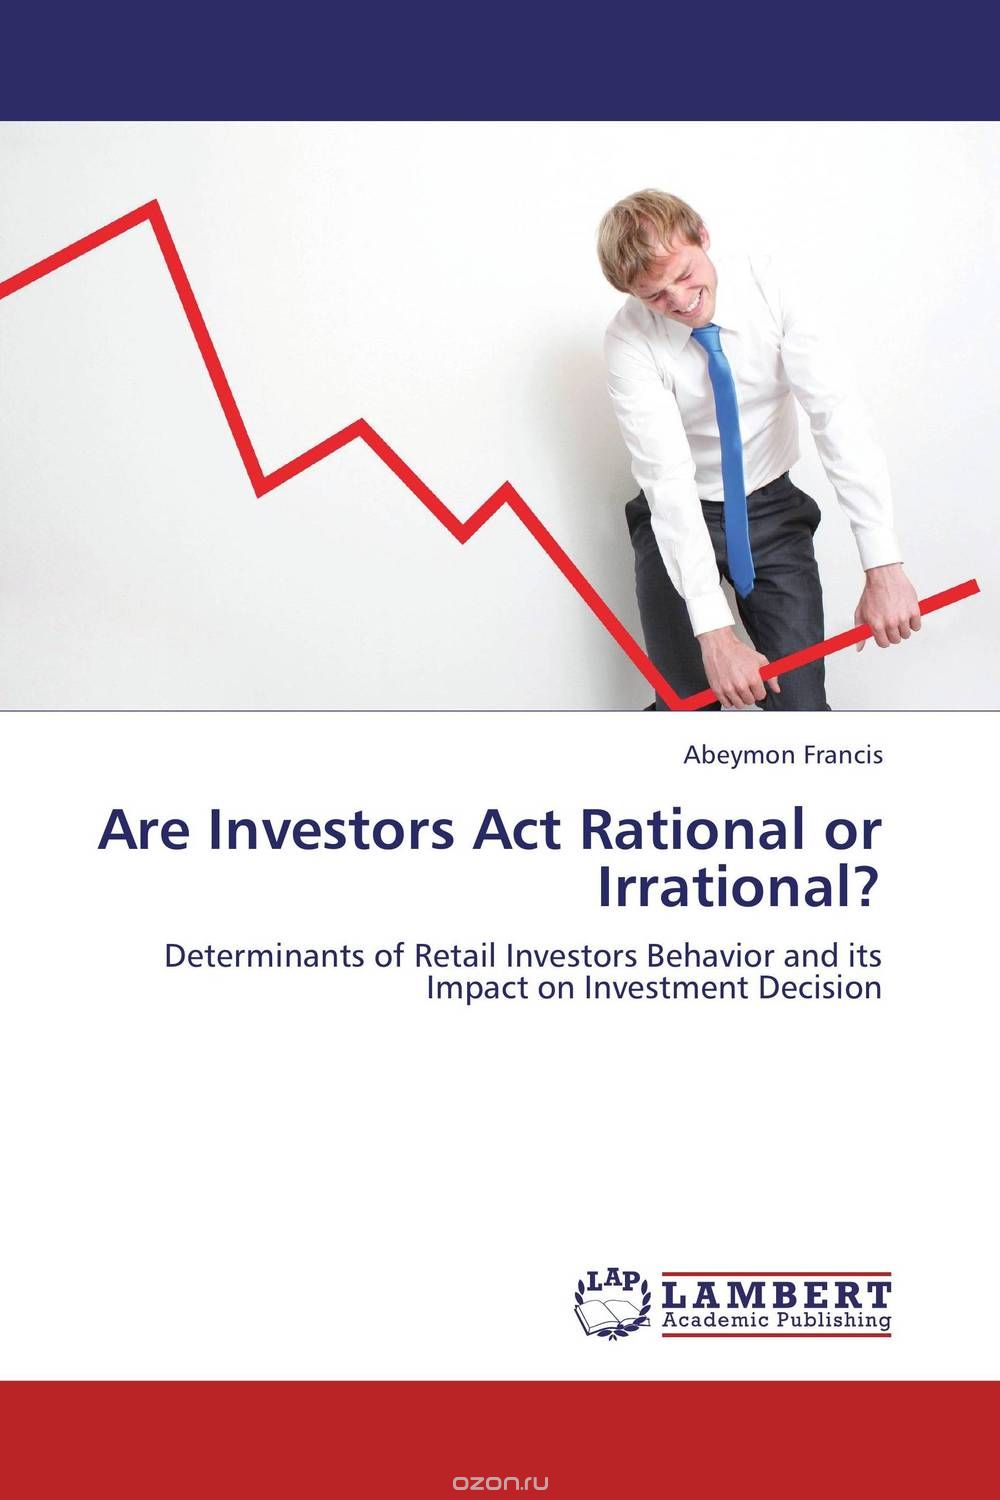 Скачать книгу "Are Investors Act Rational or Irrational?"